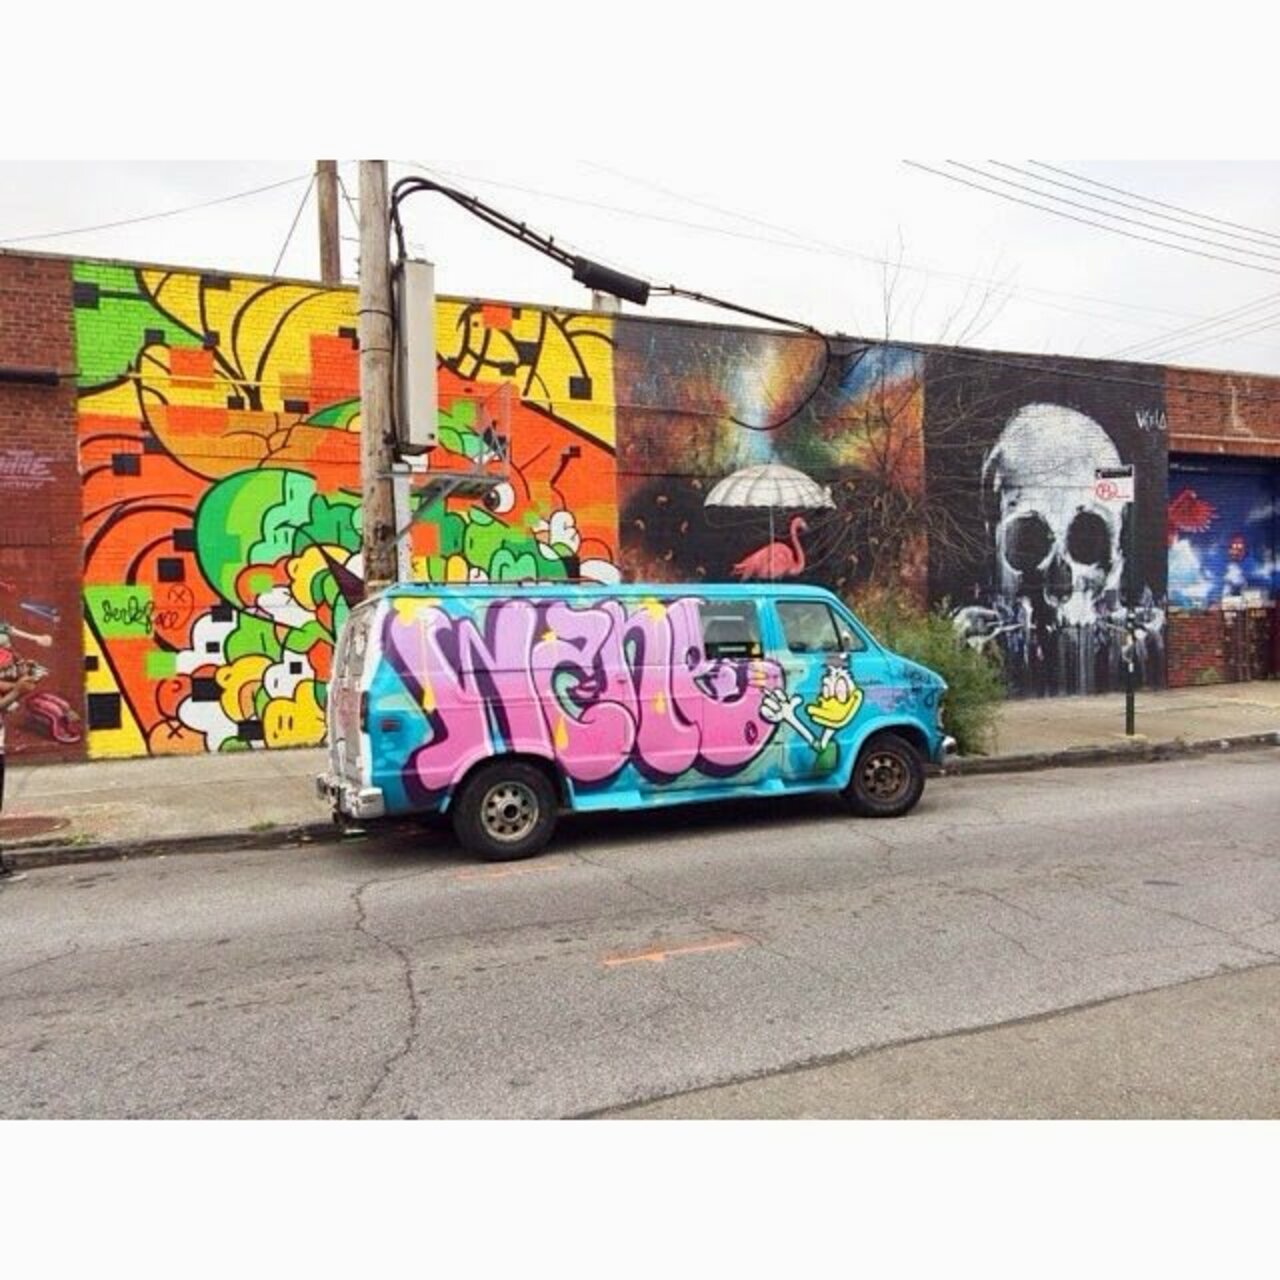 I saw this van in #brooklyn . Does anyone know of the #artist ? #streetart #graffiti https://t.co/WjHvrZ4CJI